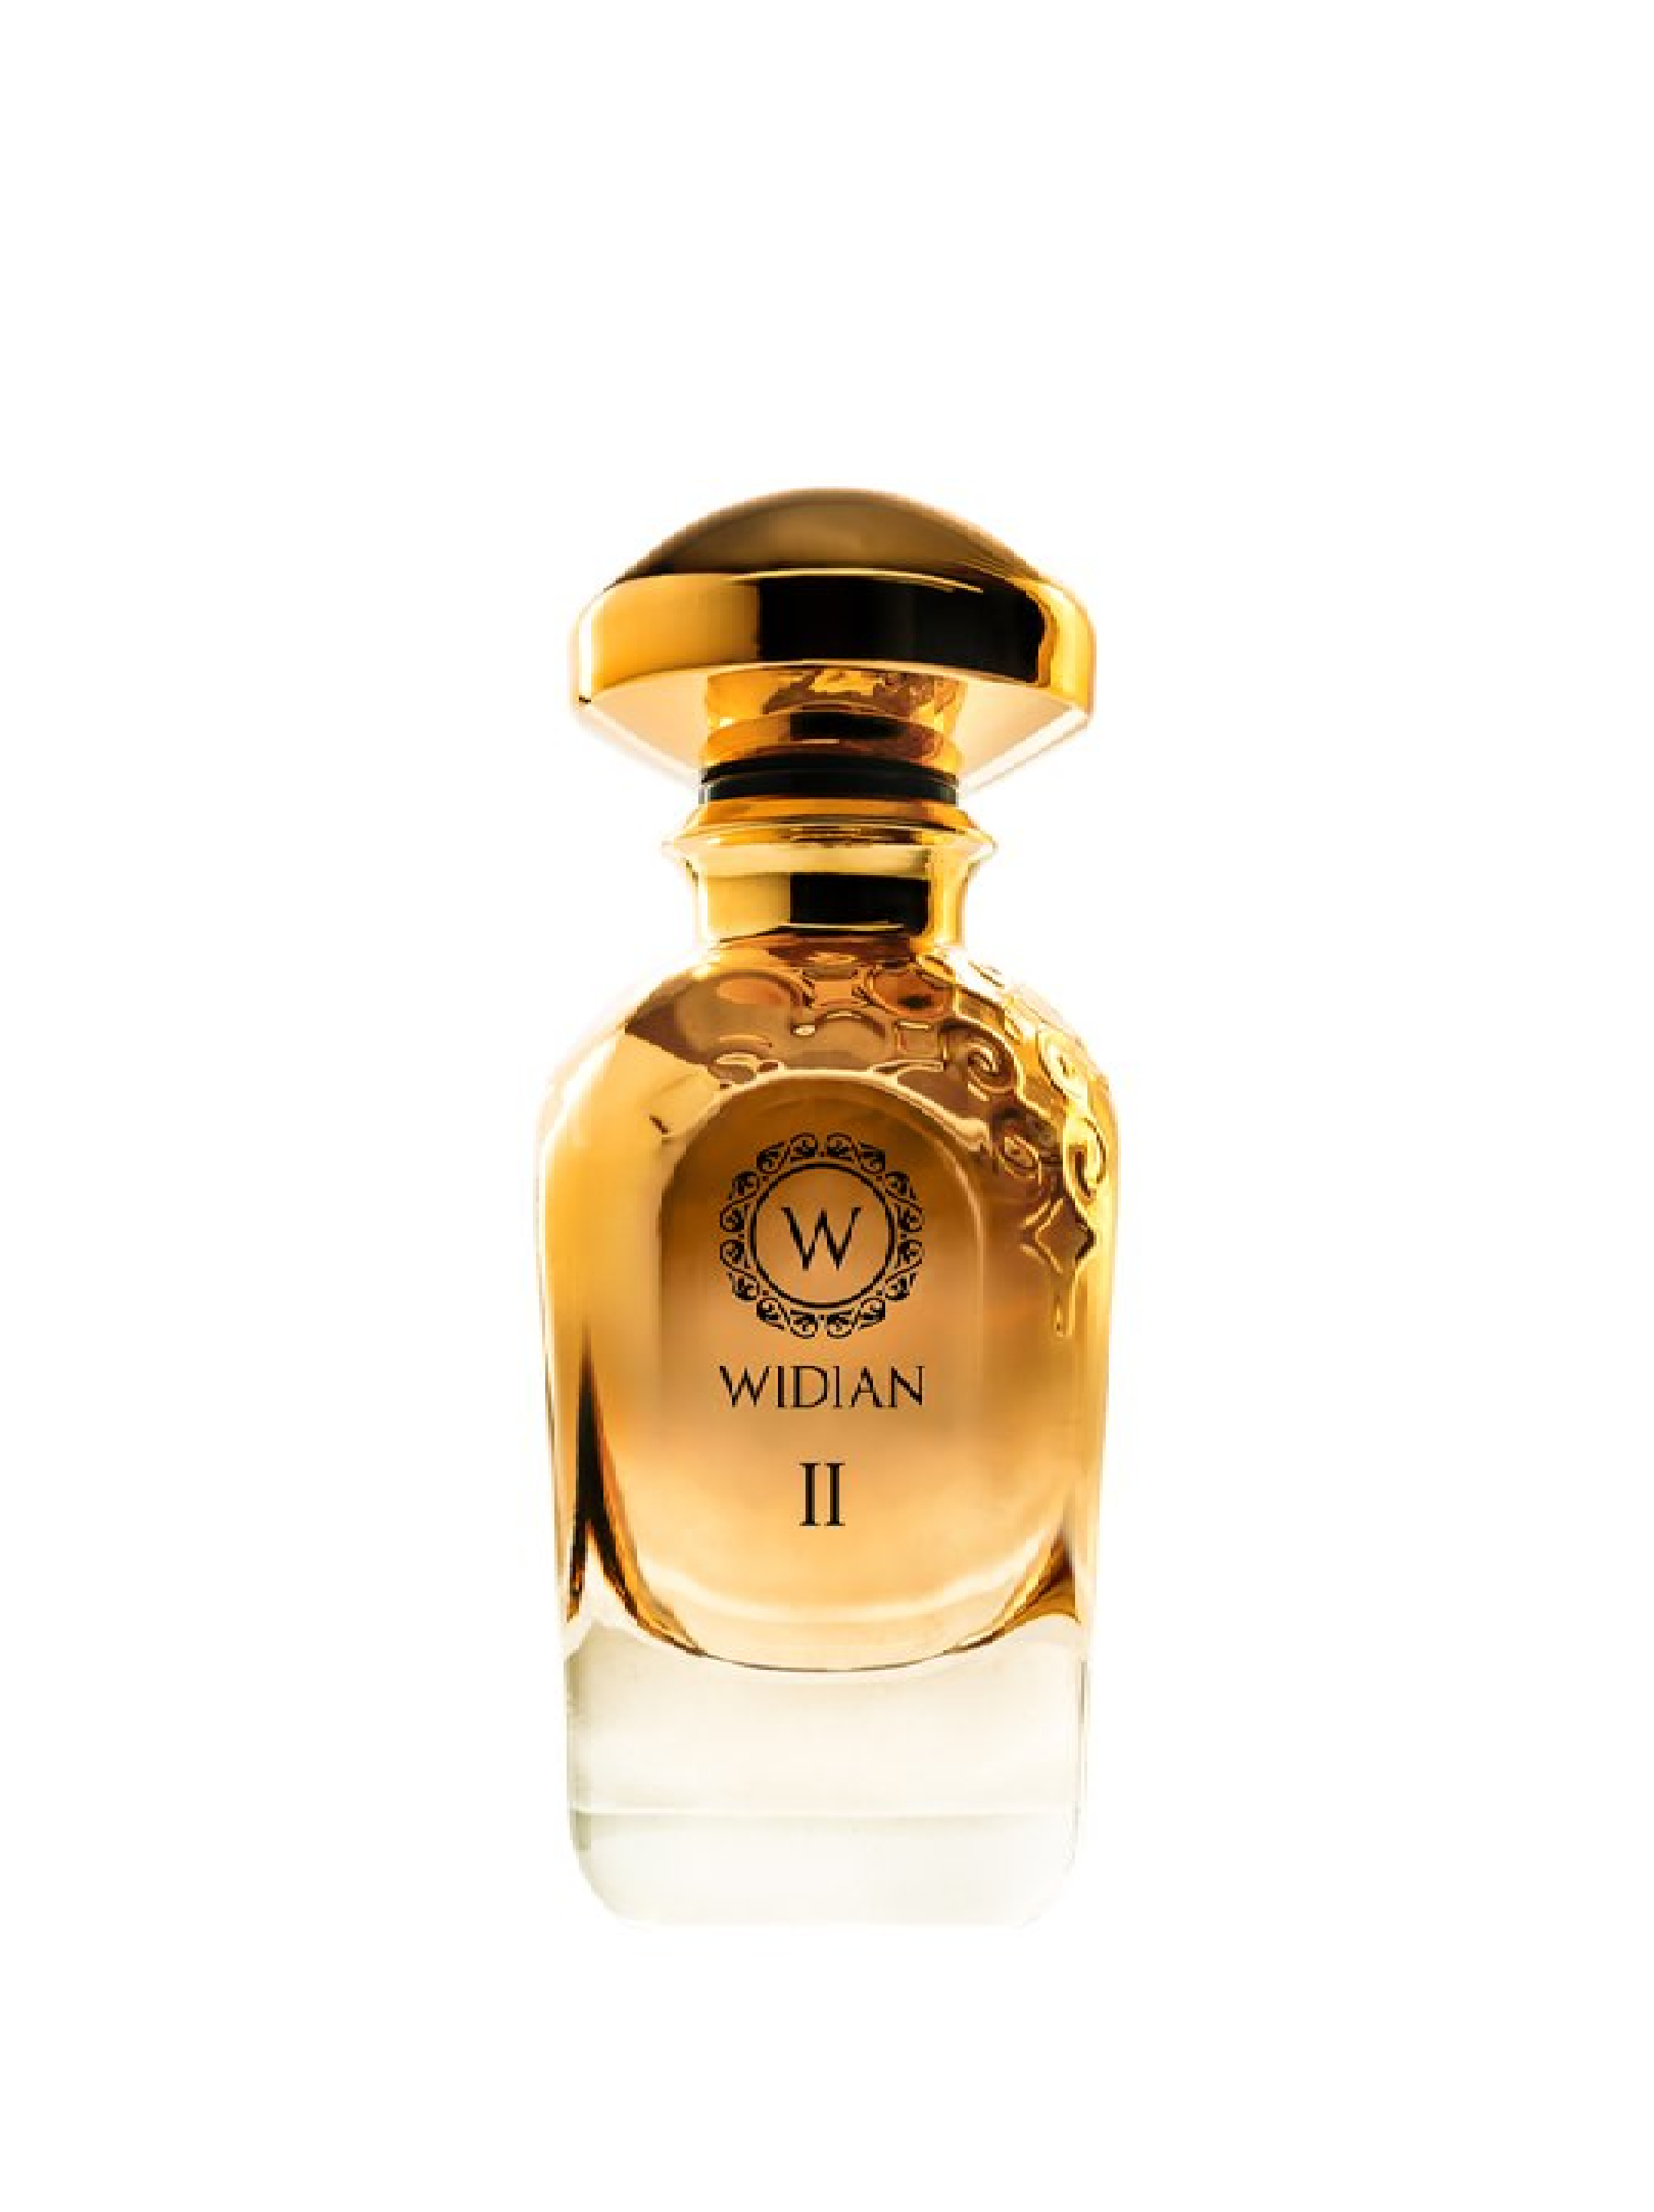 Arabia 1. Духи Widian AJ Arabia 2. AJ Arabia Widian Gold collection II Parfum. AJ Arabia Widian Gold collection i Parfum. AJ Arabia Widian Delma Parfum Tester 50ml.